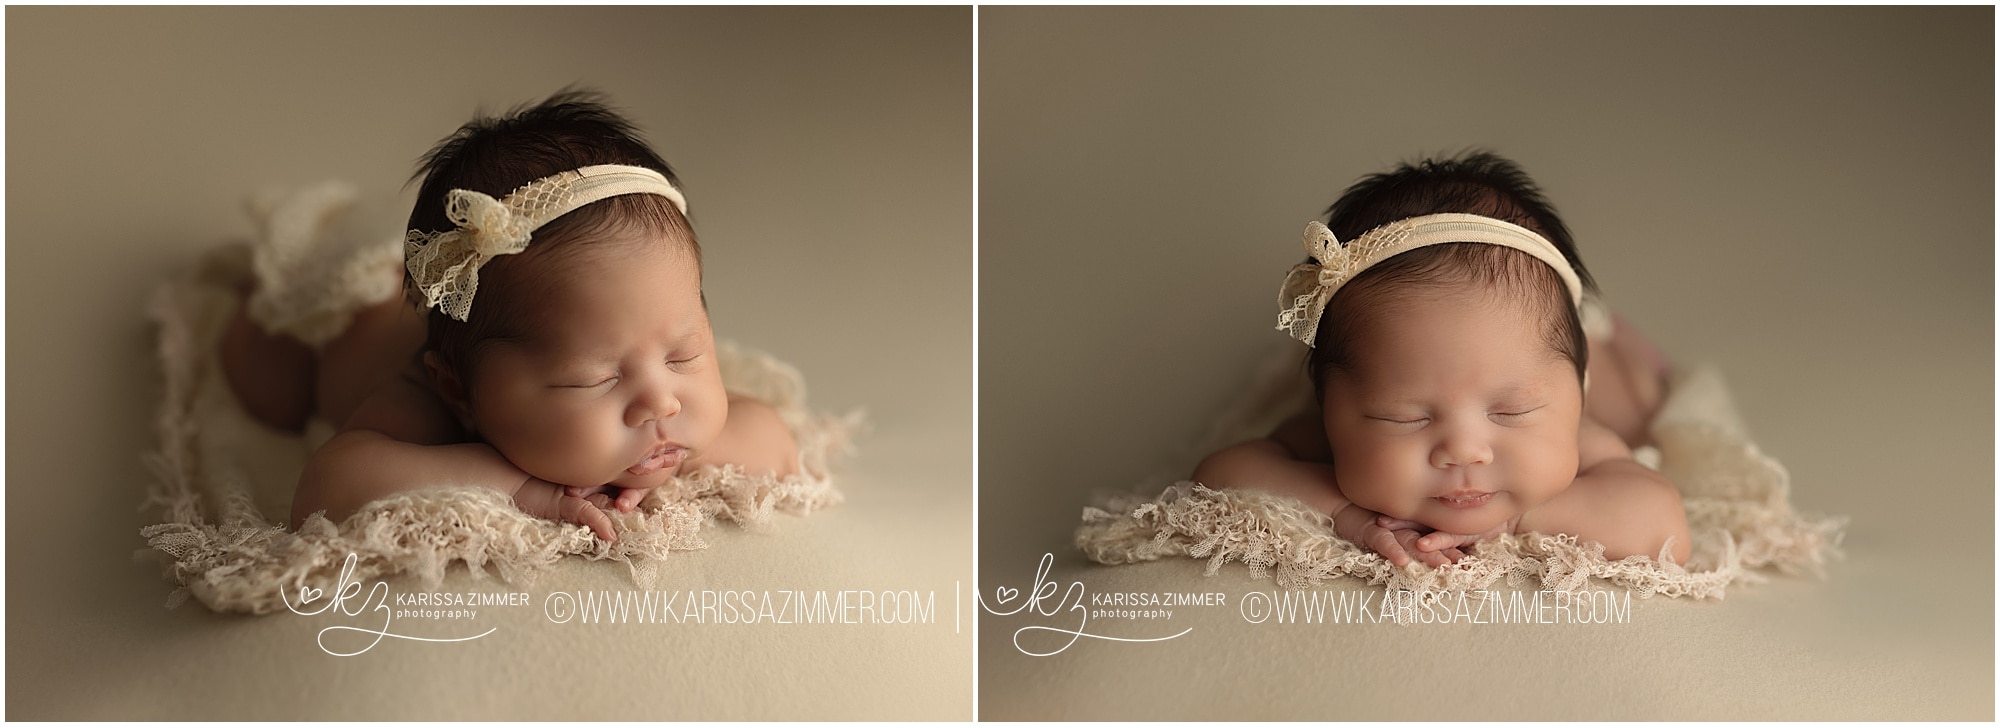 Newborn Baby Girl Photography Poses